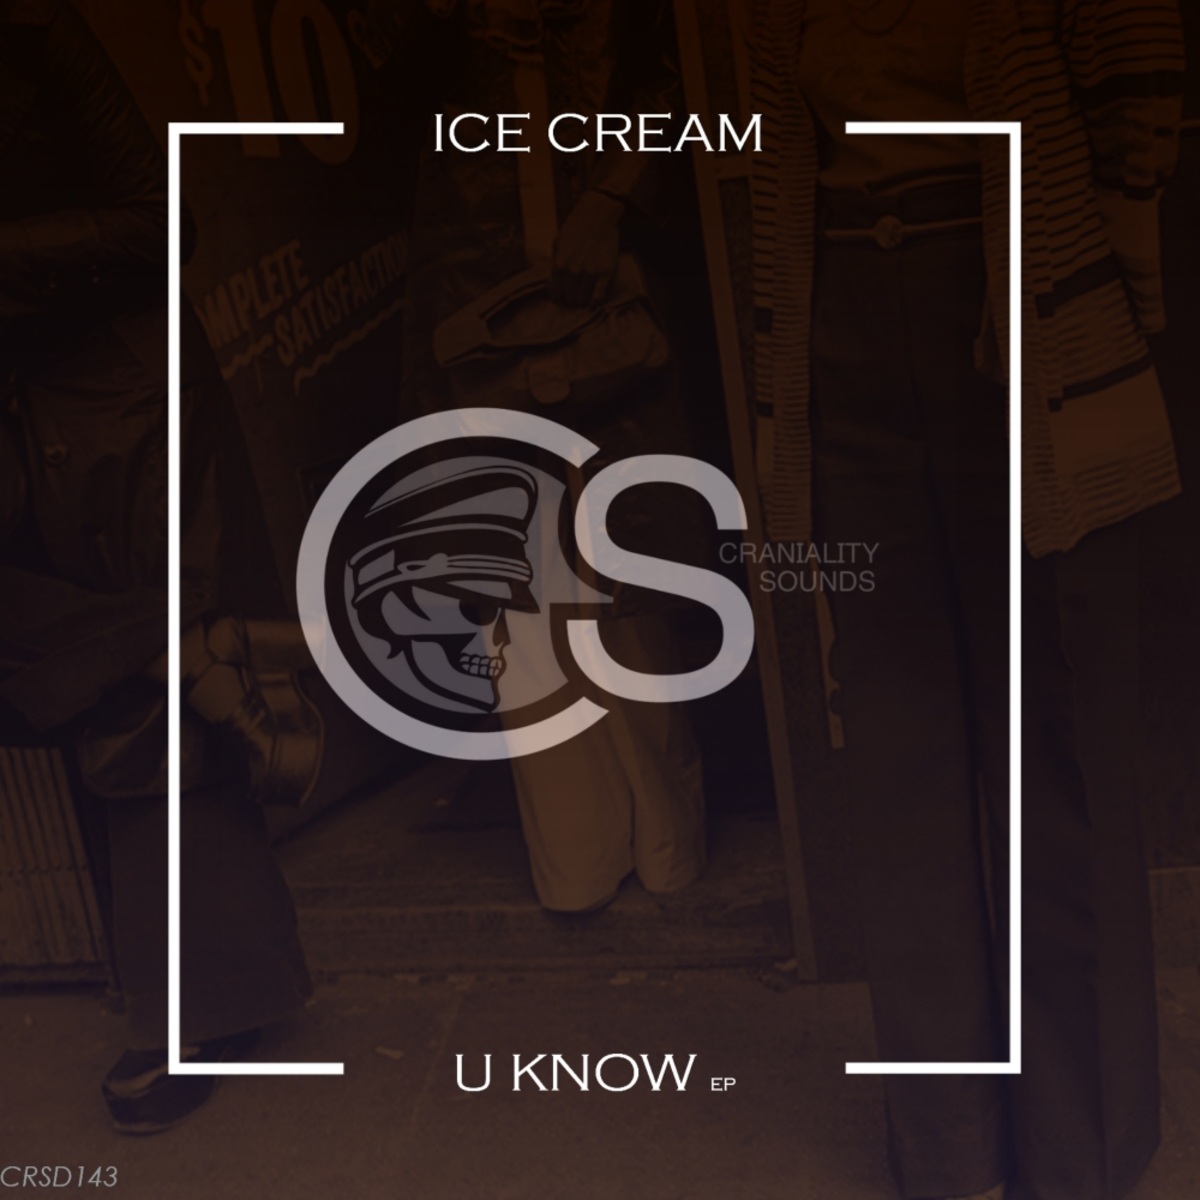 Ice Cream - U Know EP / Craniality Sounds